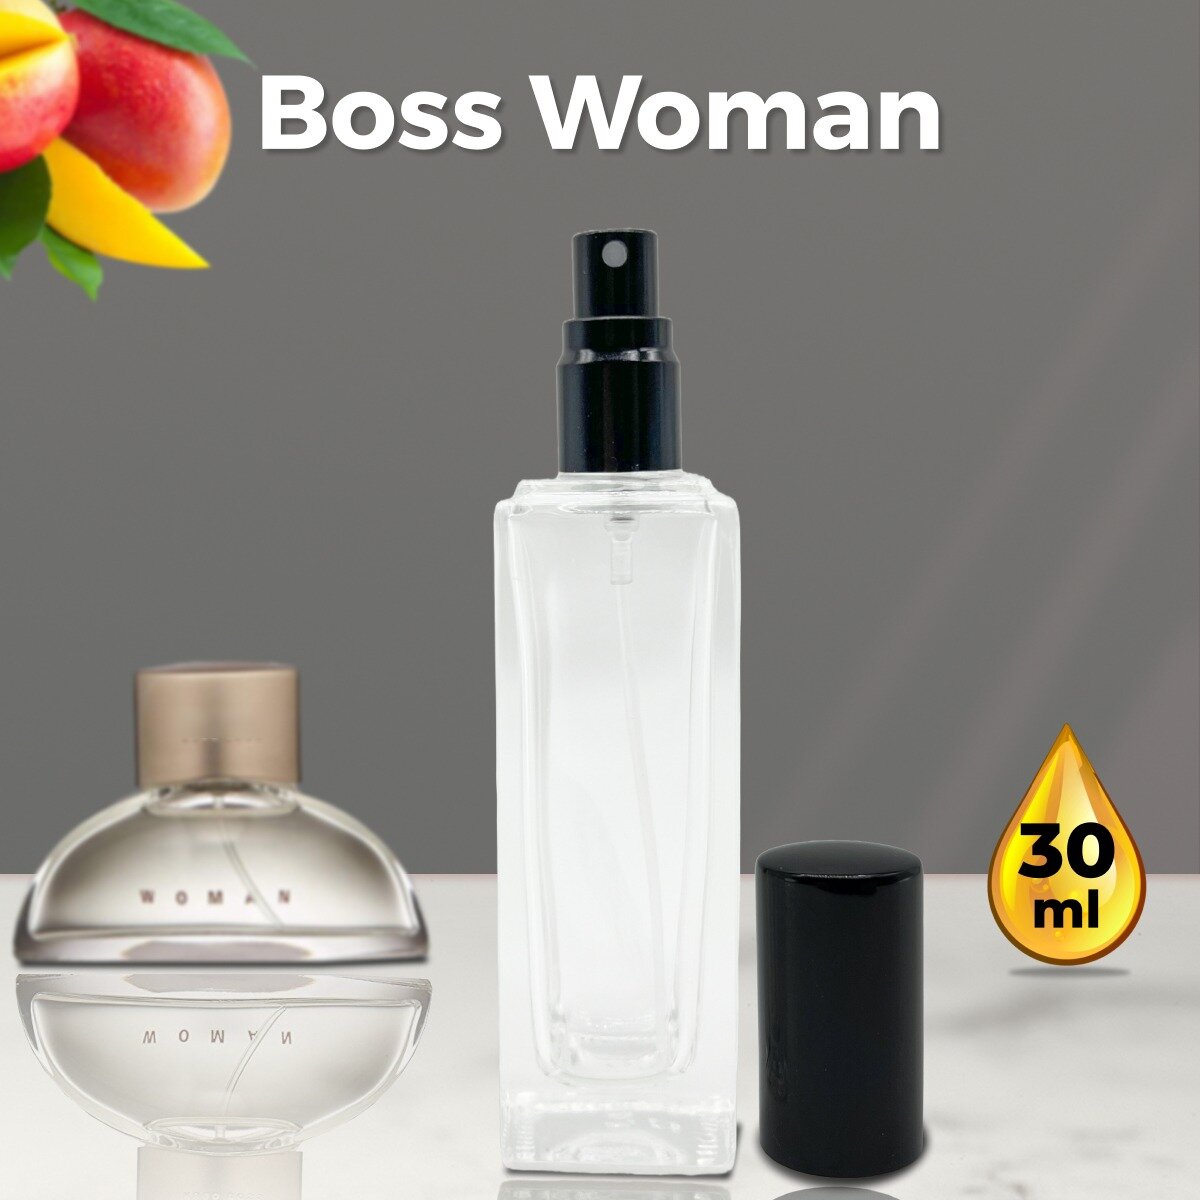 "Boss Woman" - Духи женские 30 мл + подарок 1 мл другого аромата